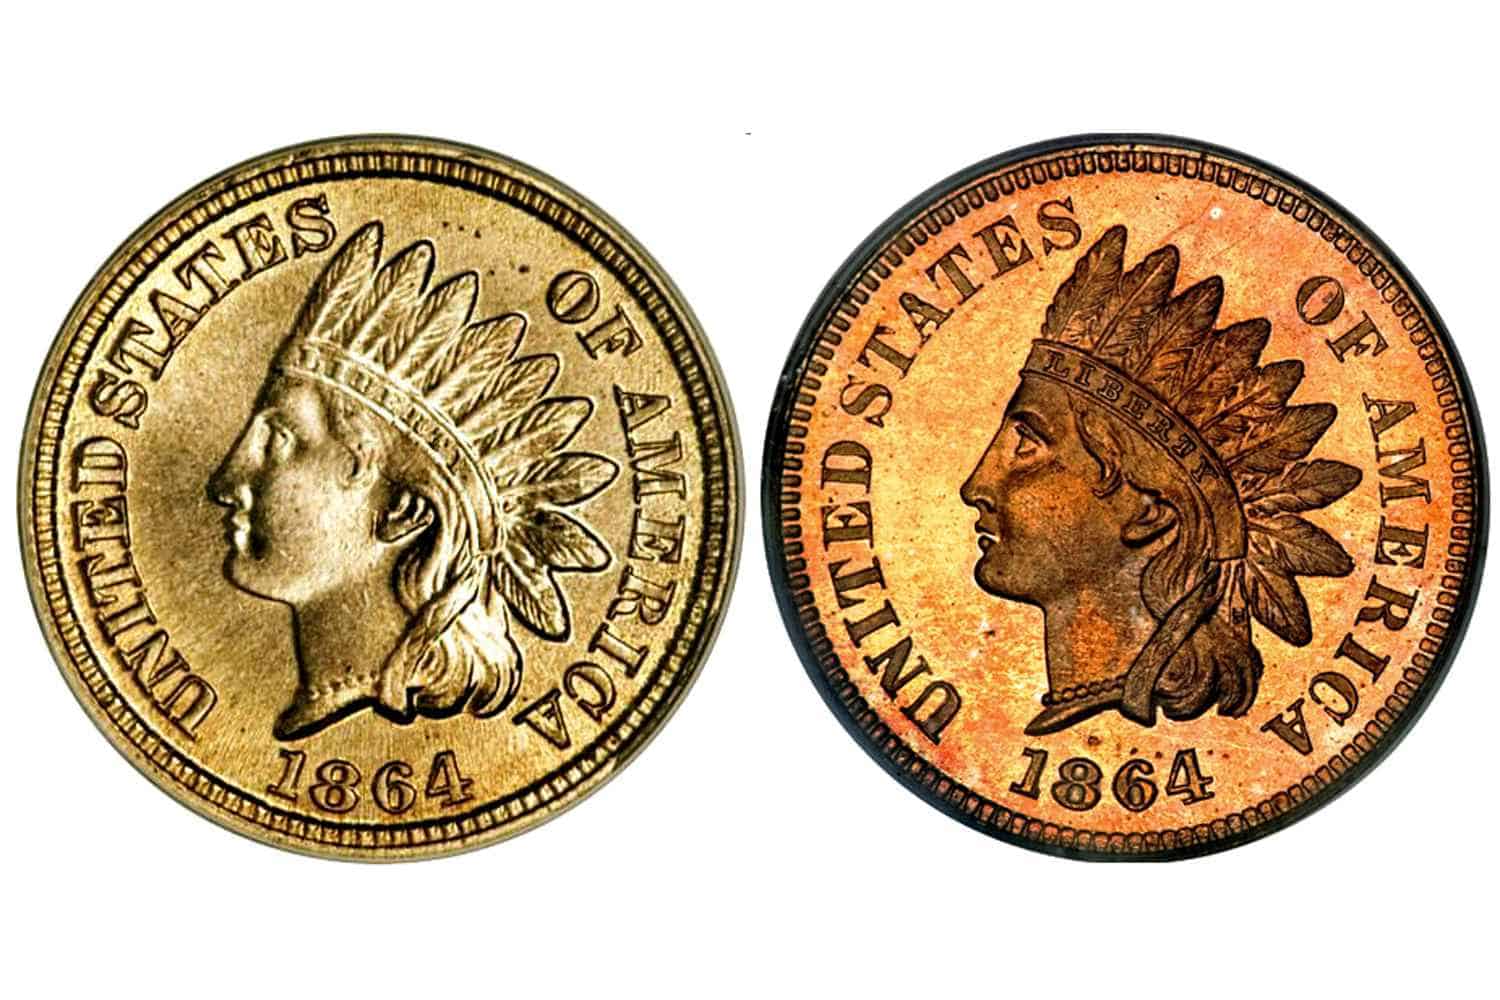 1864 Indian Head Penny History